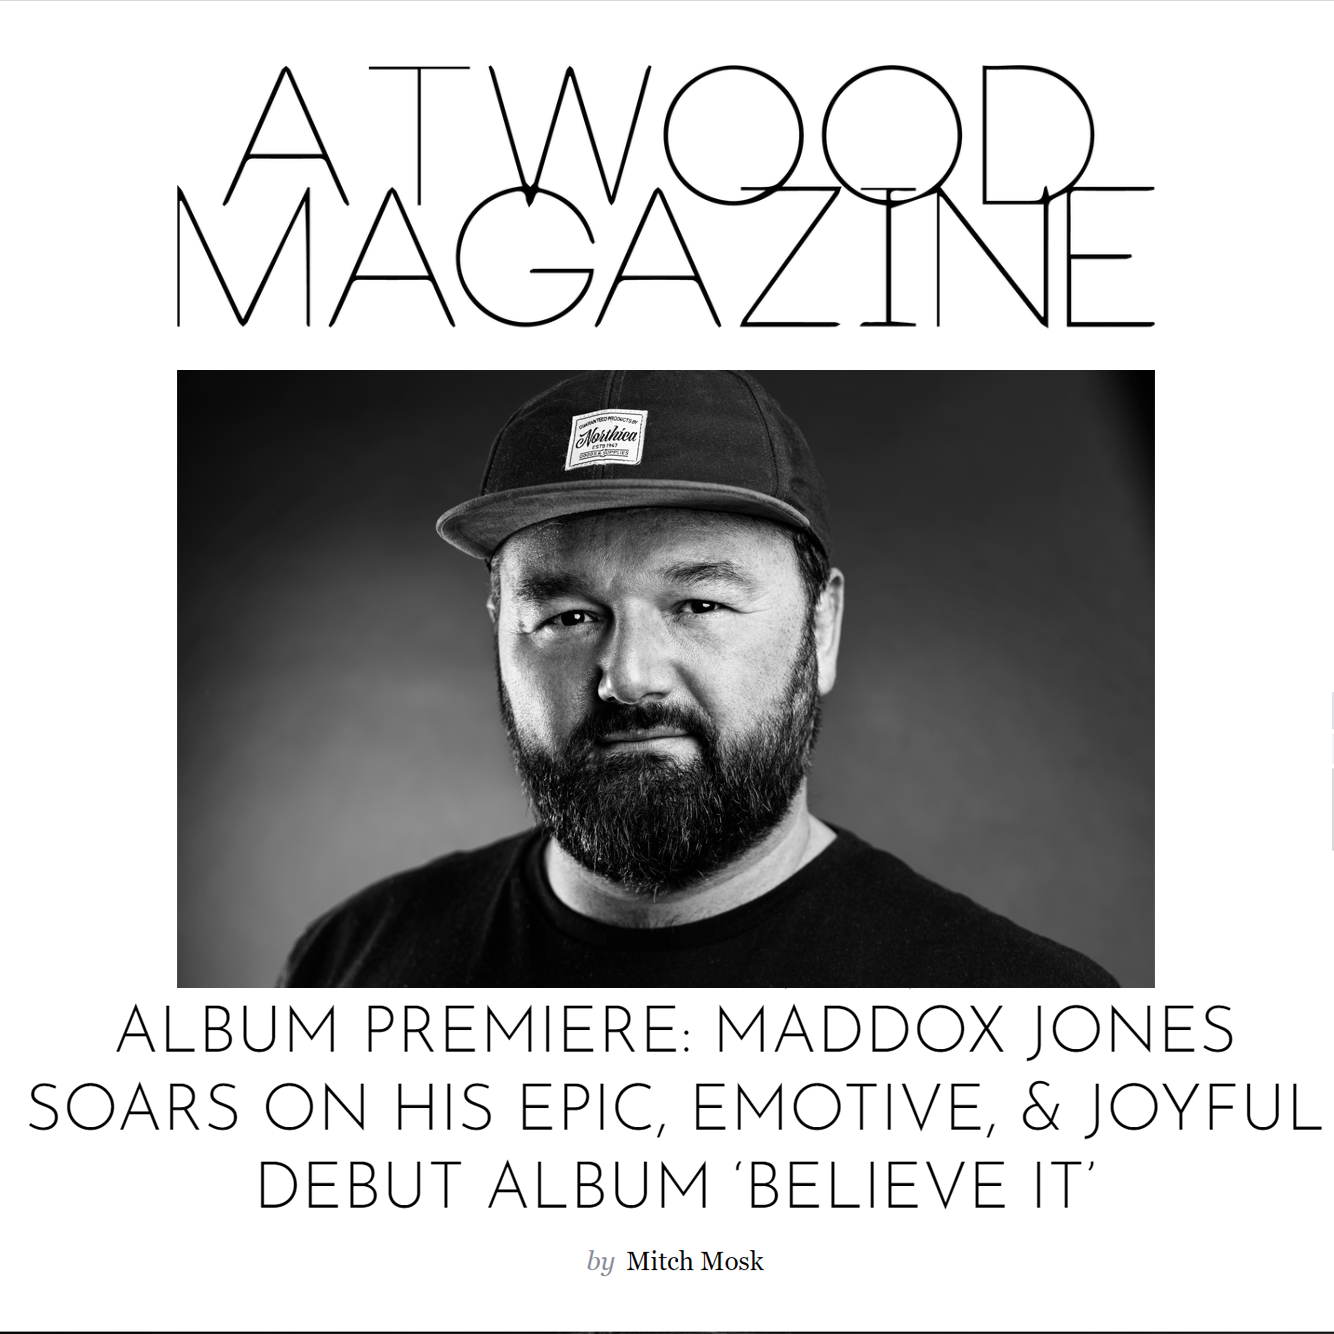 Maddox Jones - Atwood Magazine Premiere - Website